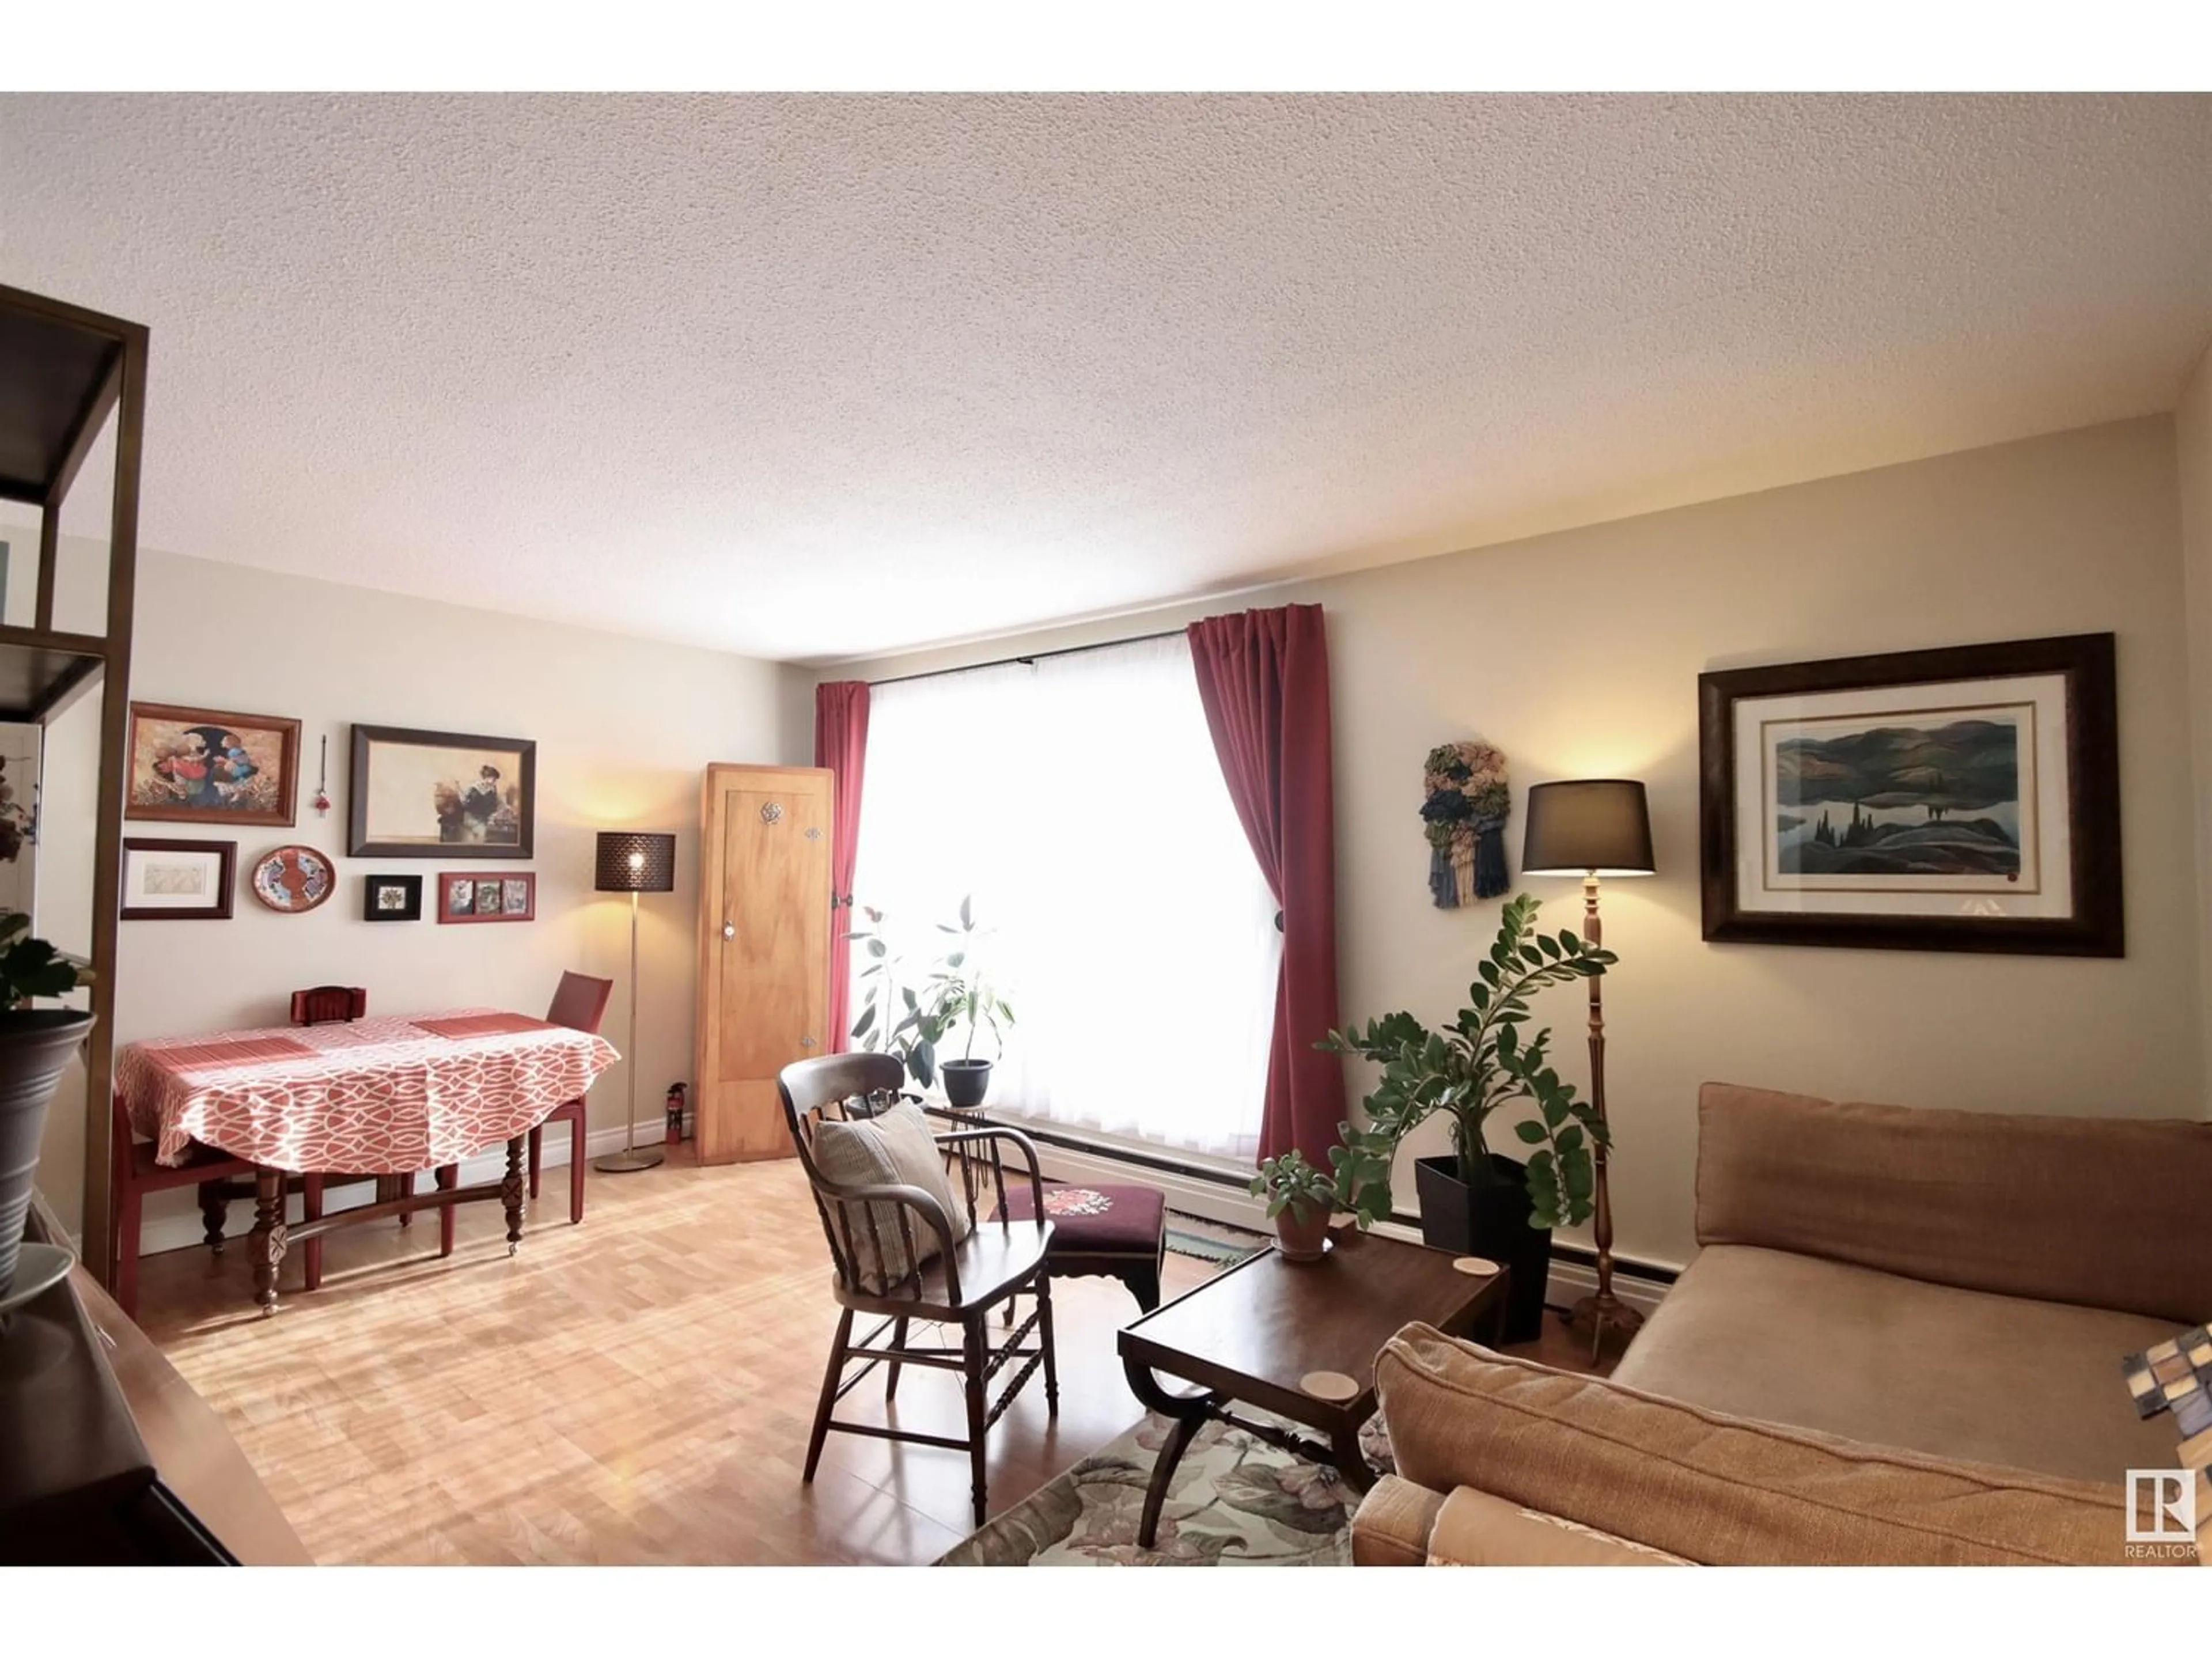 Living room for #301 10415 93 ST NW, Edmonton Alberta T5H1X5